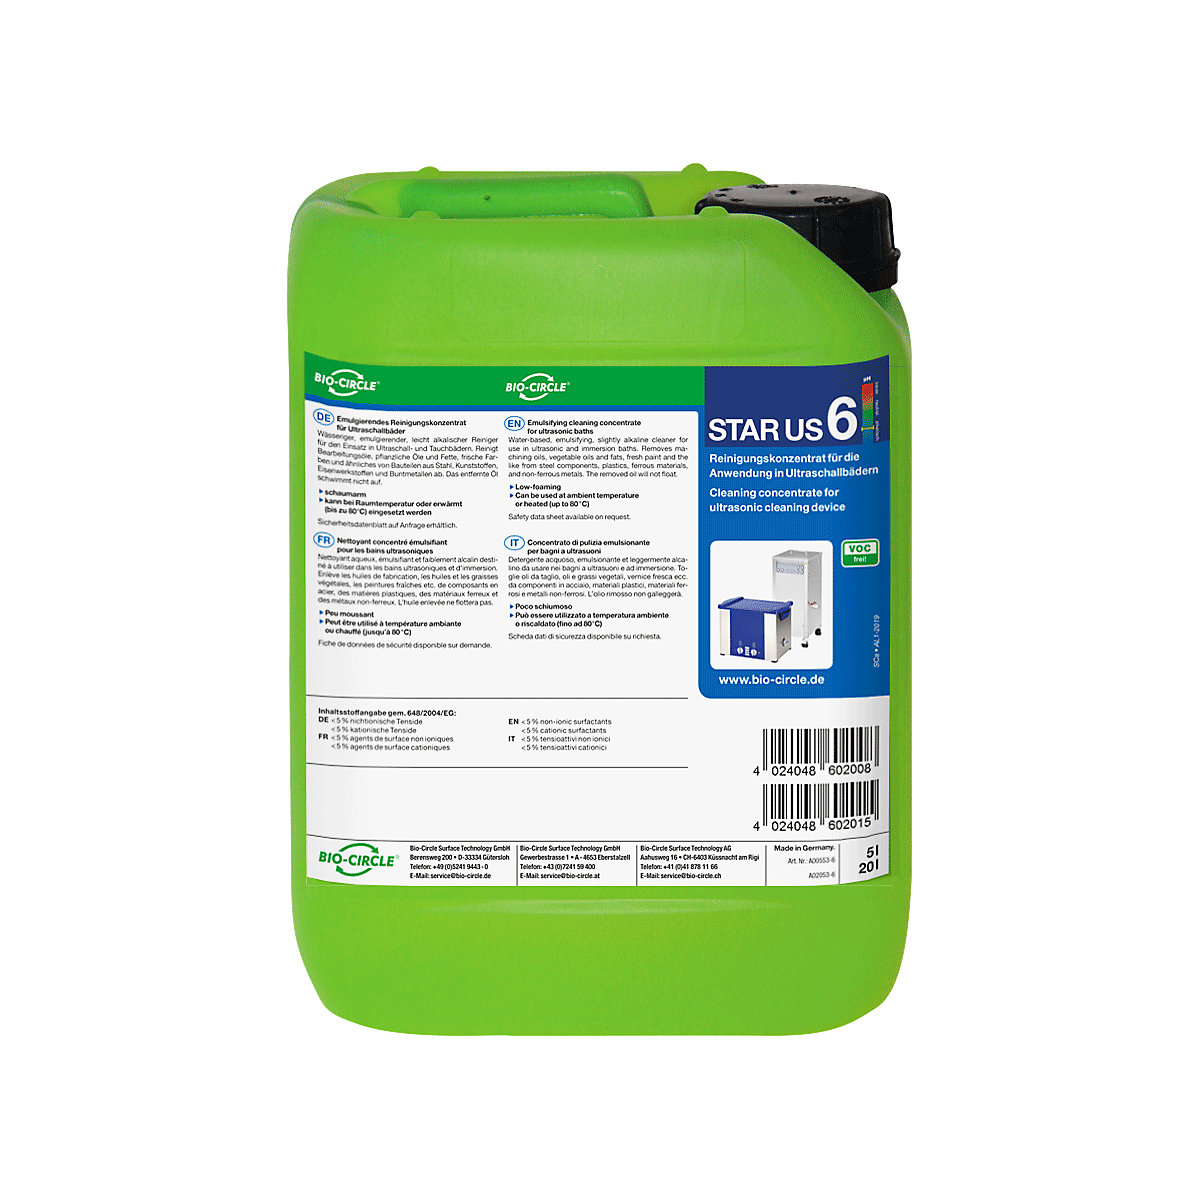 Detergente para limpeza ultrassónica STAR US 6 – Bio-Circle